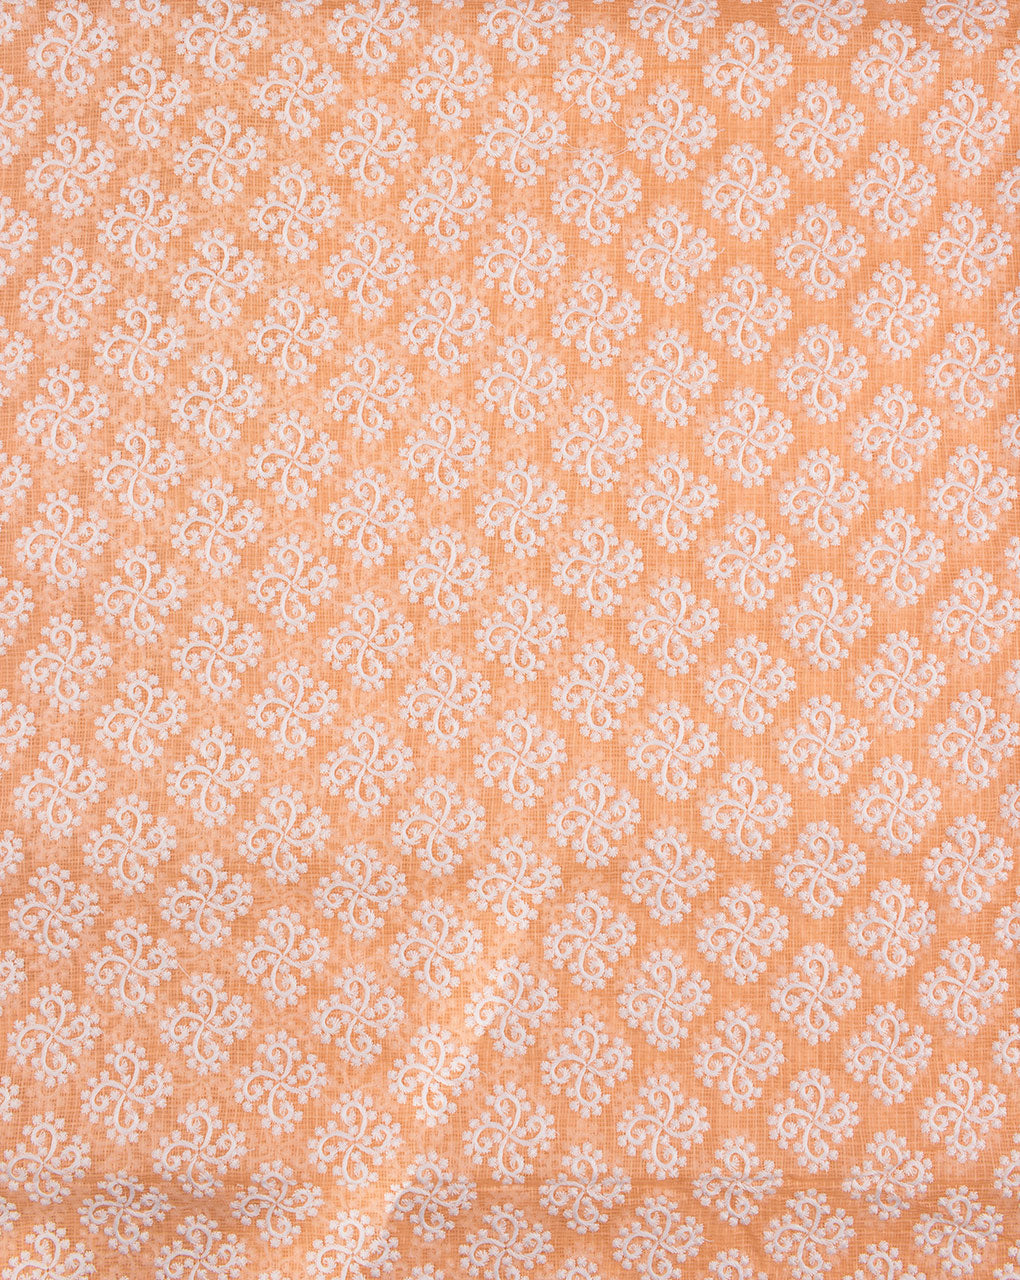 Embroidered Cotton Kota Doria Fabric - Fabriclore.com